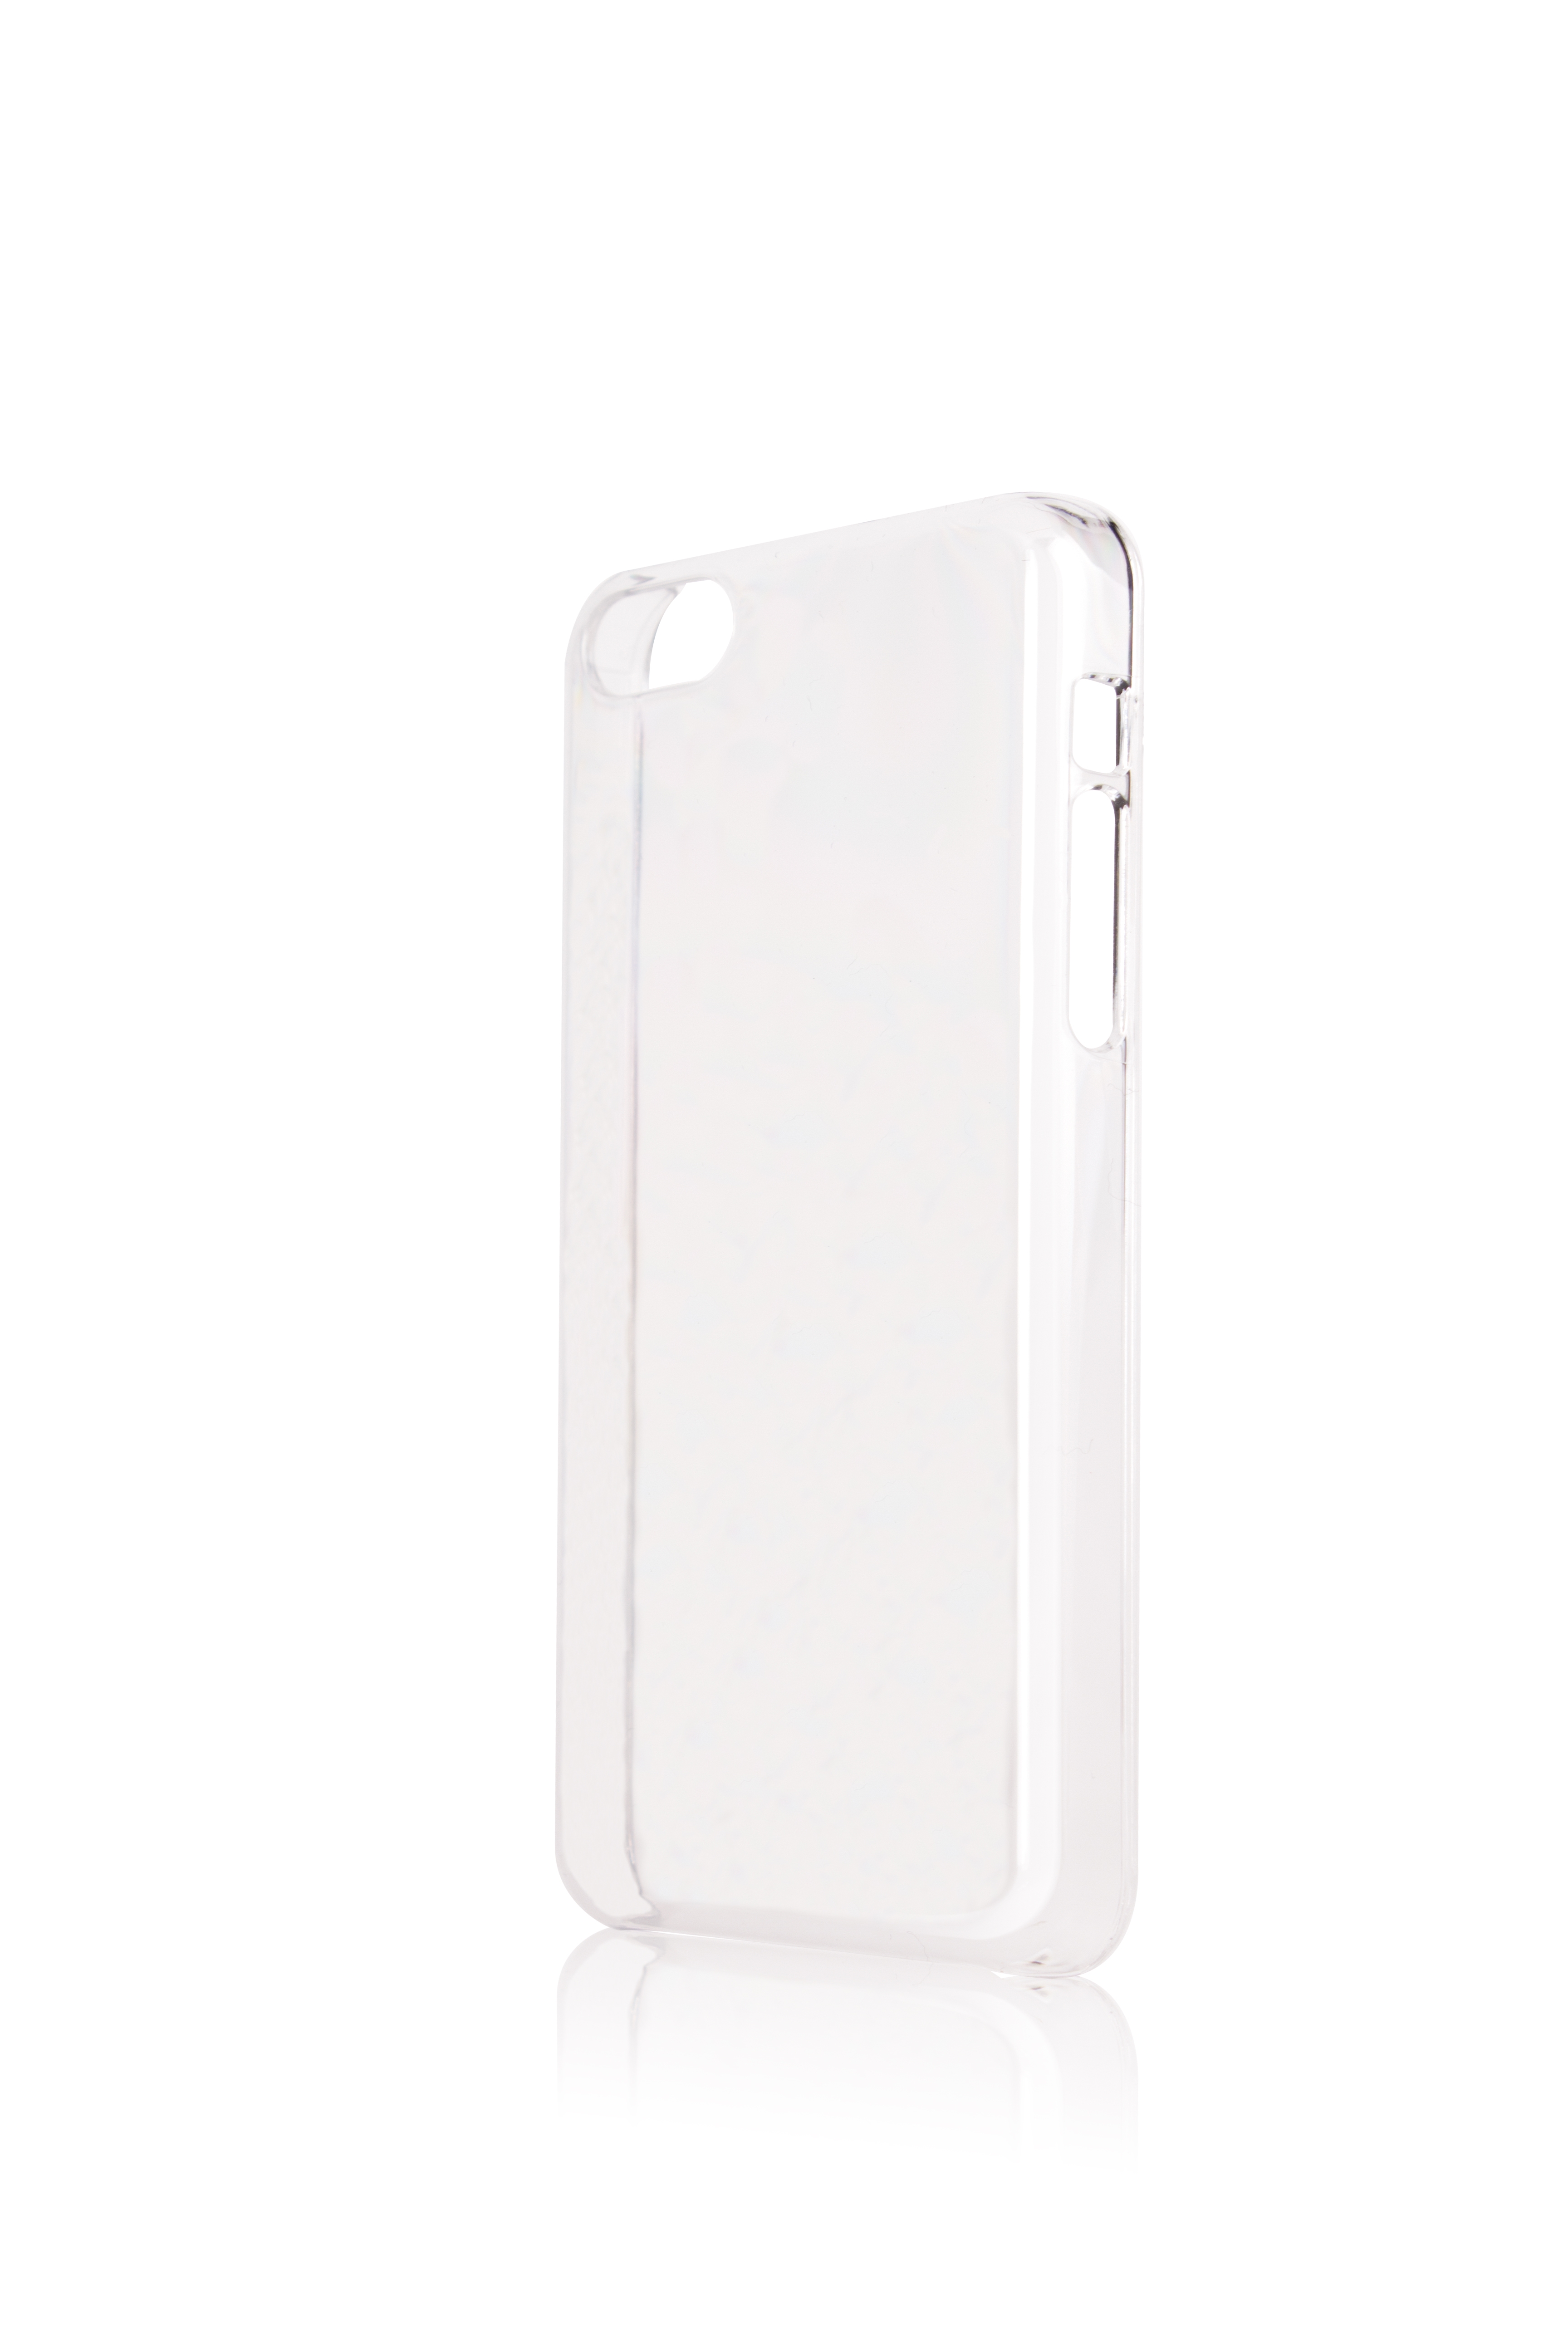 Coque XQISIT iPlate Glosssy Transparente pour iPhone 5c 